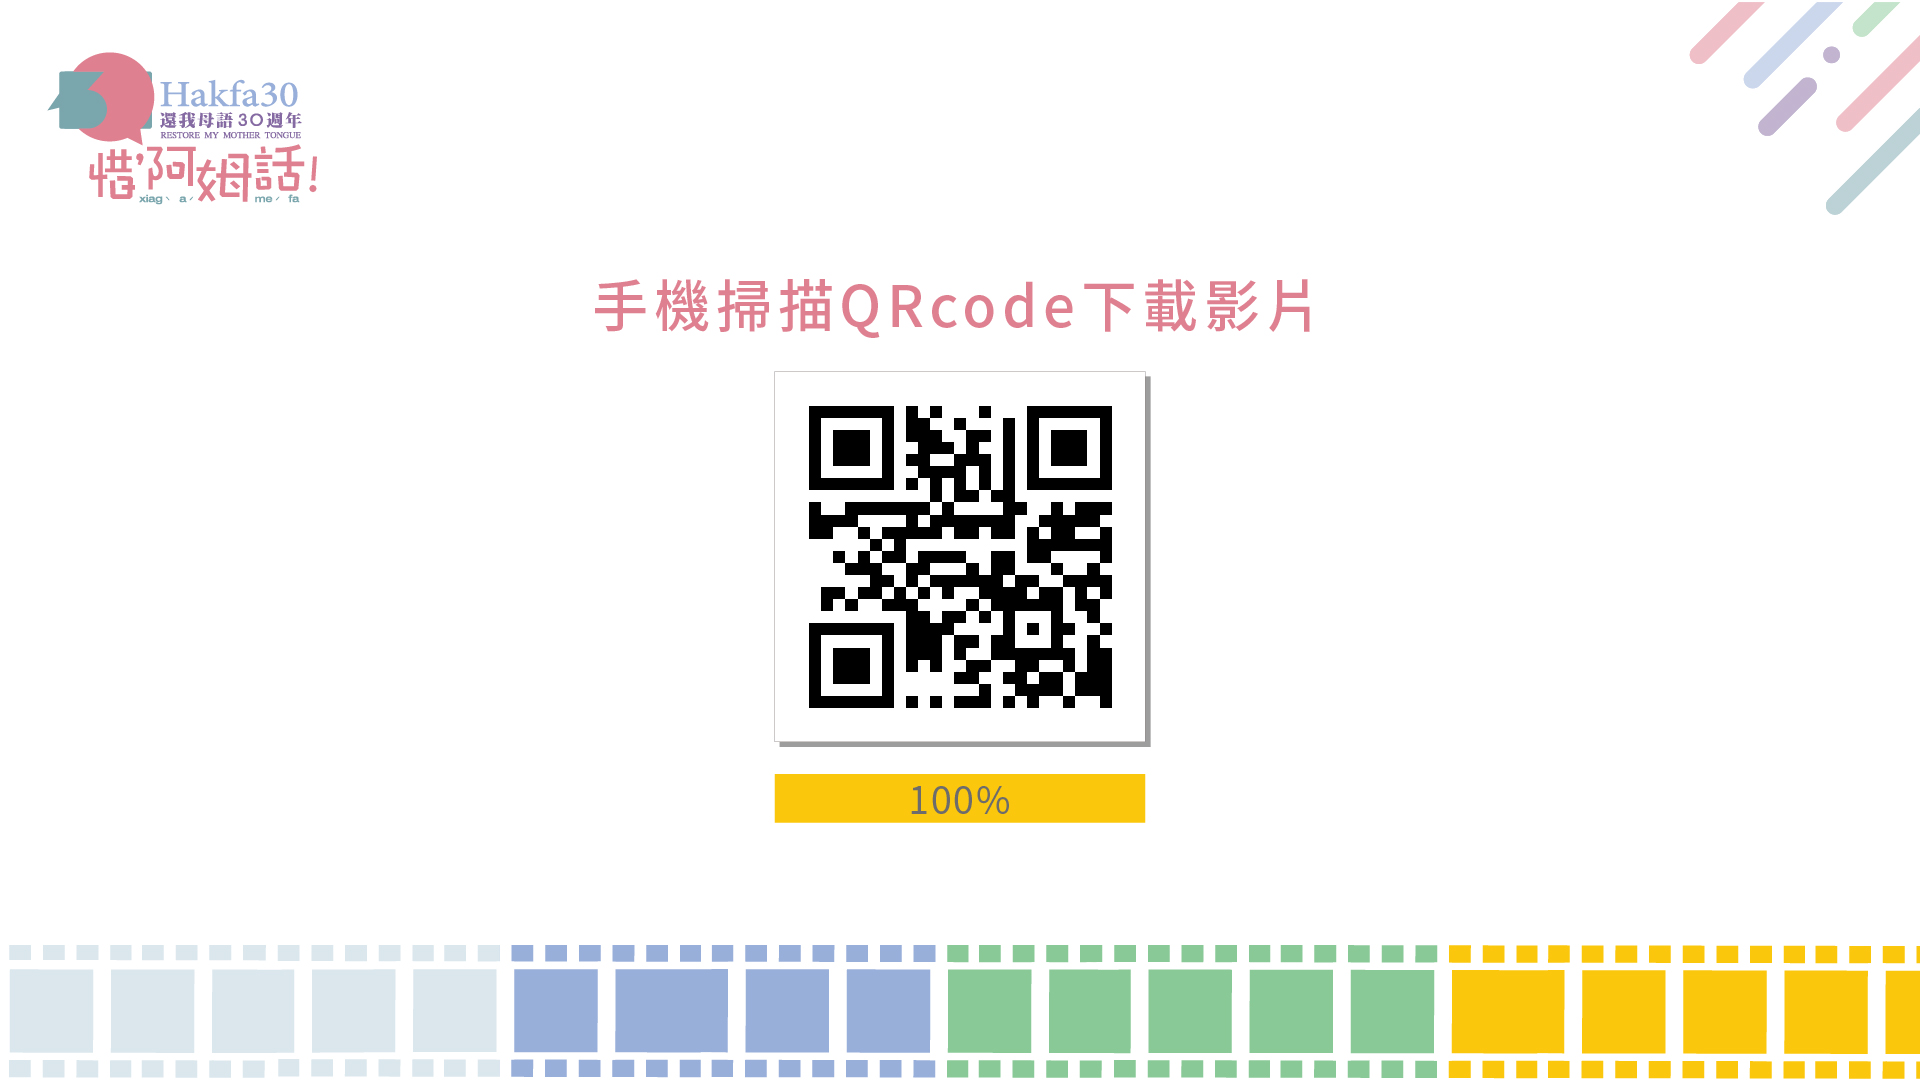 attachments/201811_台灣水企/7790124776.jpg